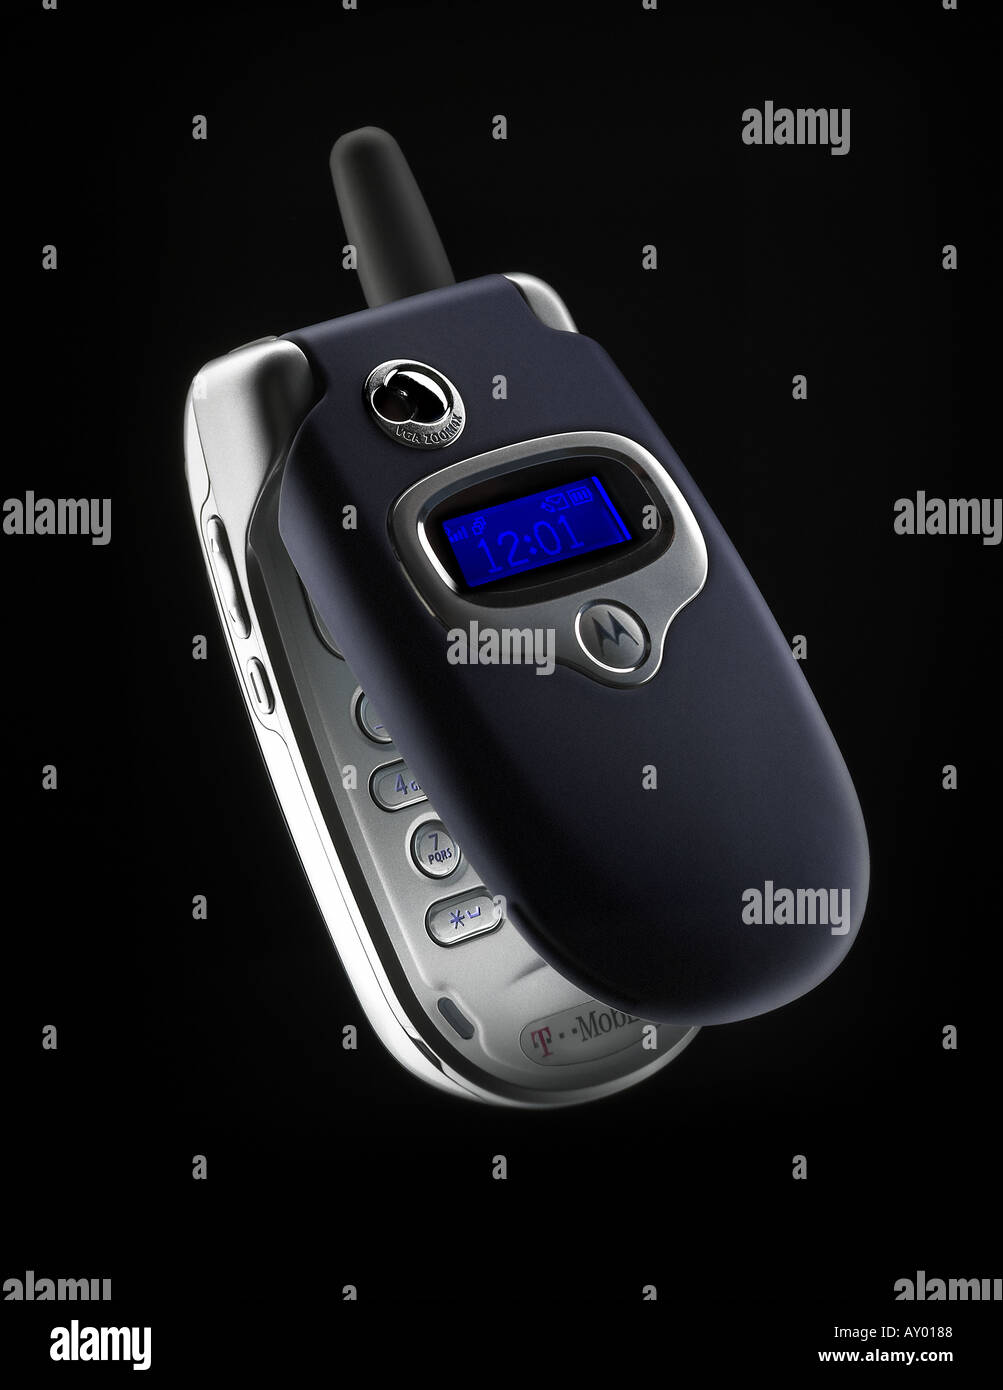 telefono cellulare motorola con stile flip su sfondo nero Foto Stock